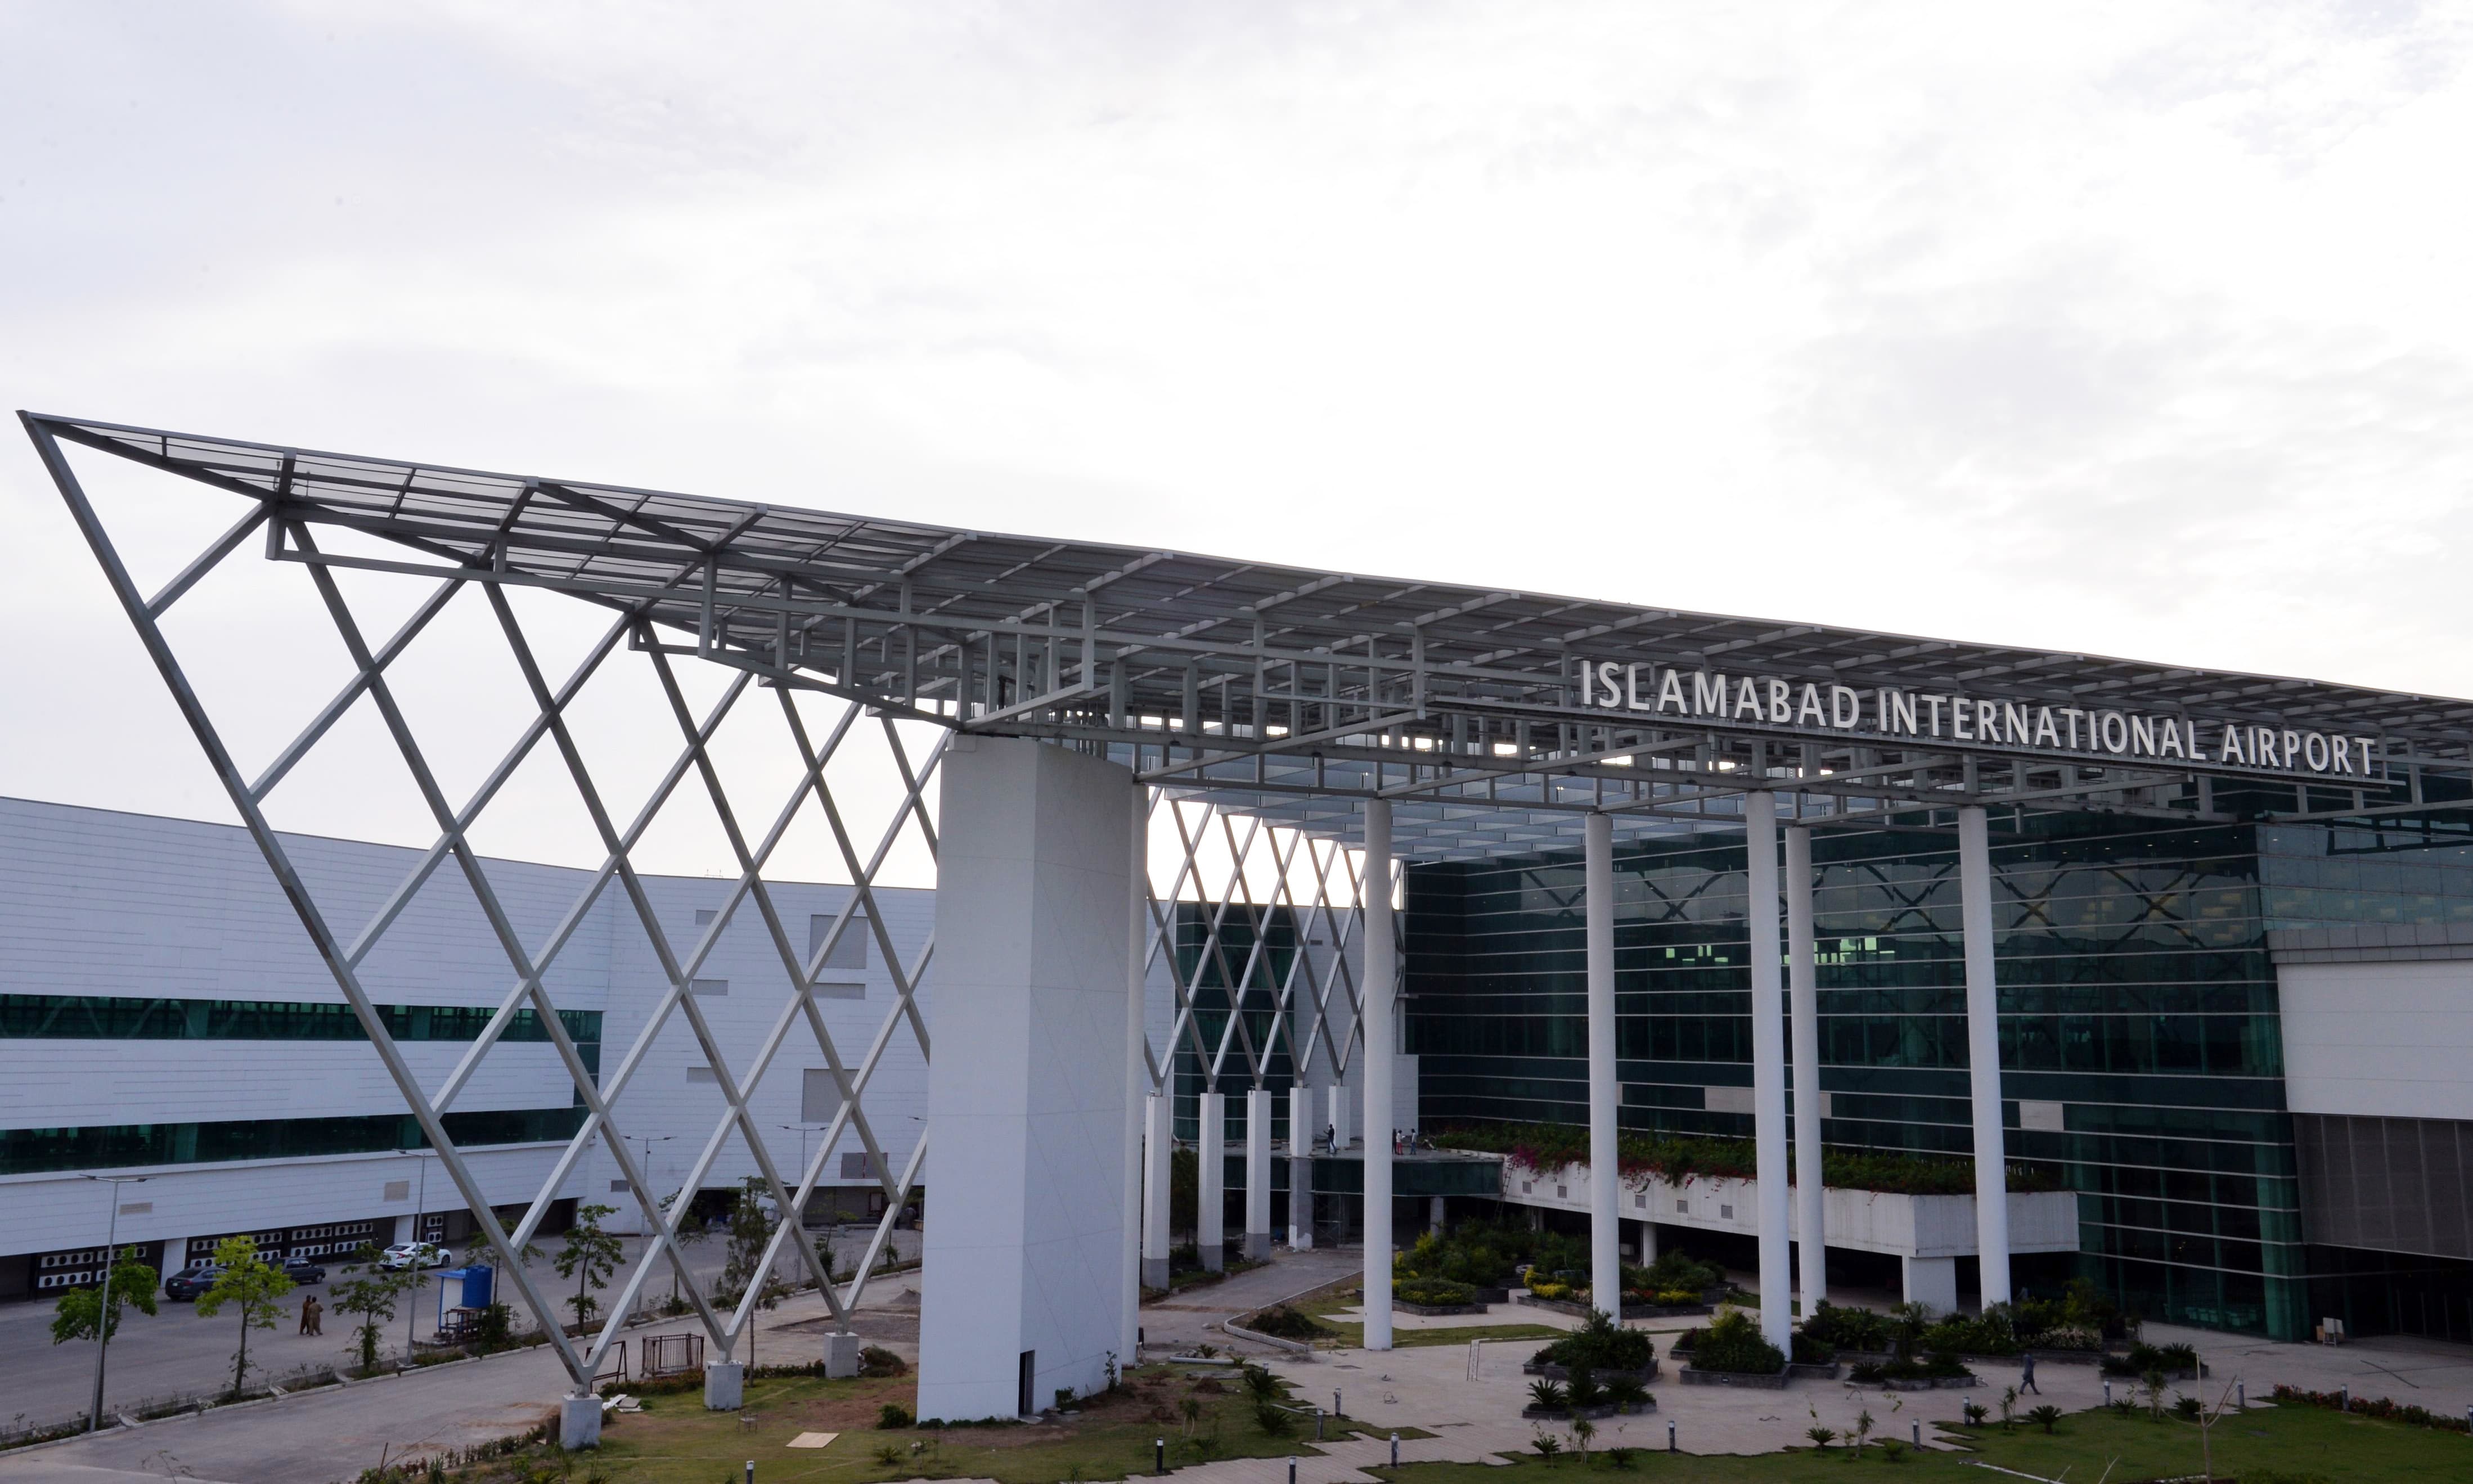 islamabad international airport photo afp